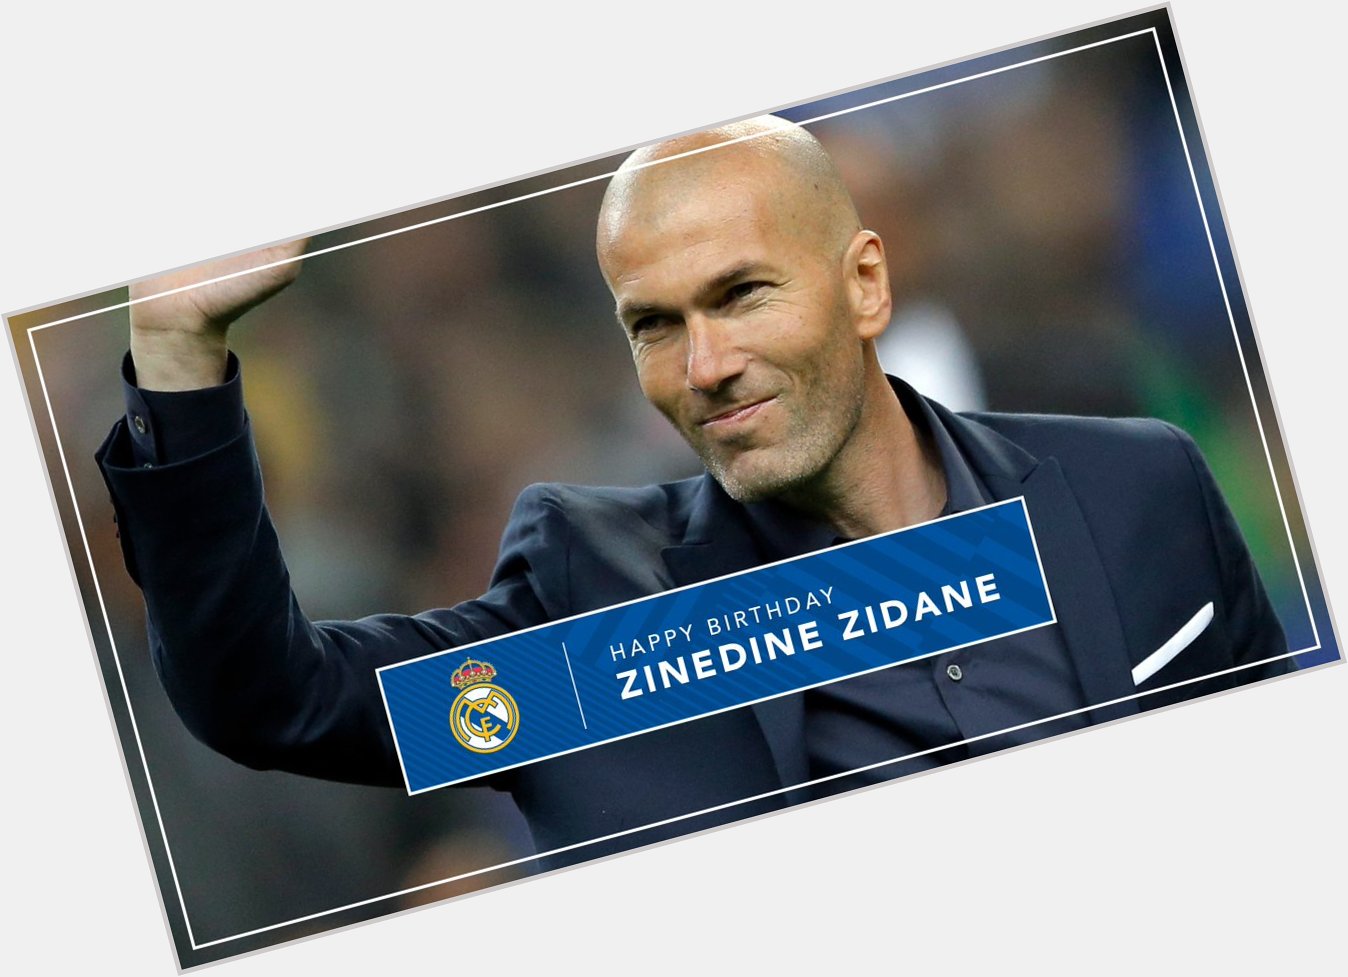 Happy Birthday to manager, Zinedine Zidane! 